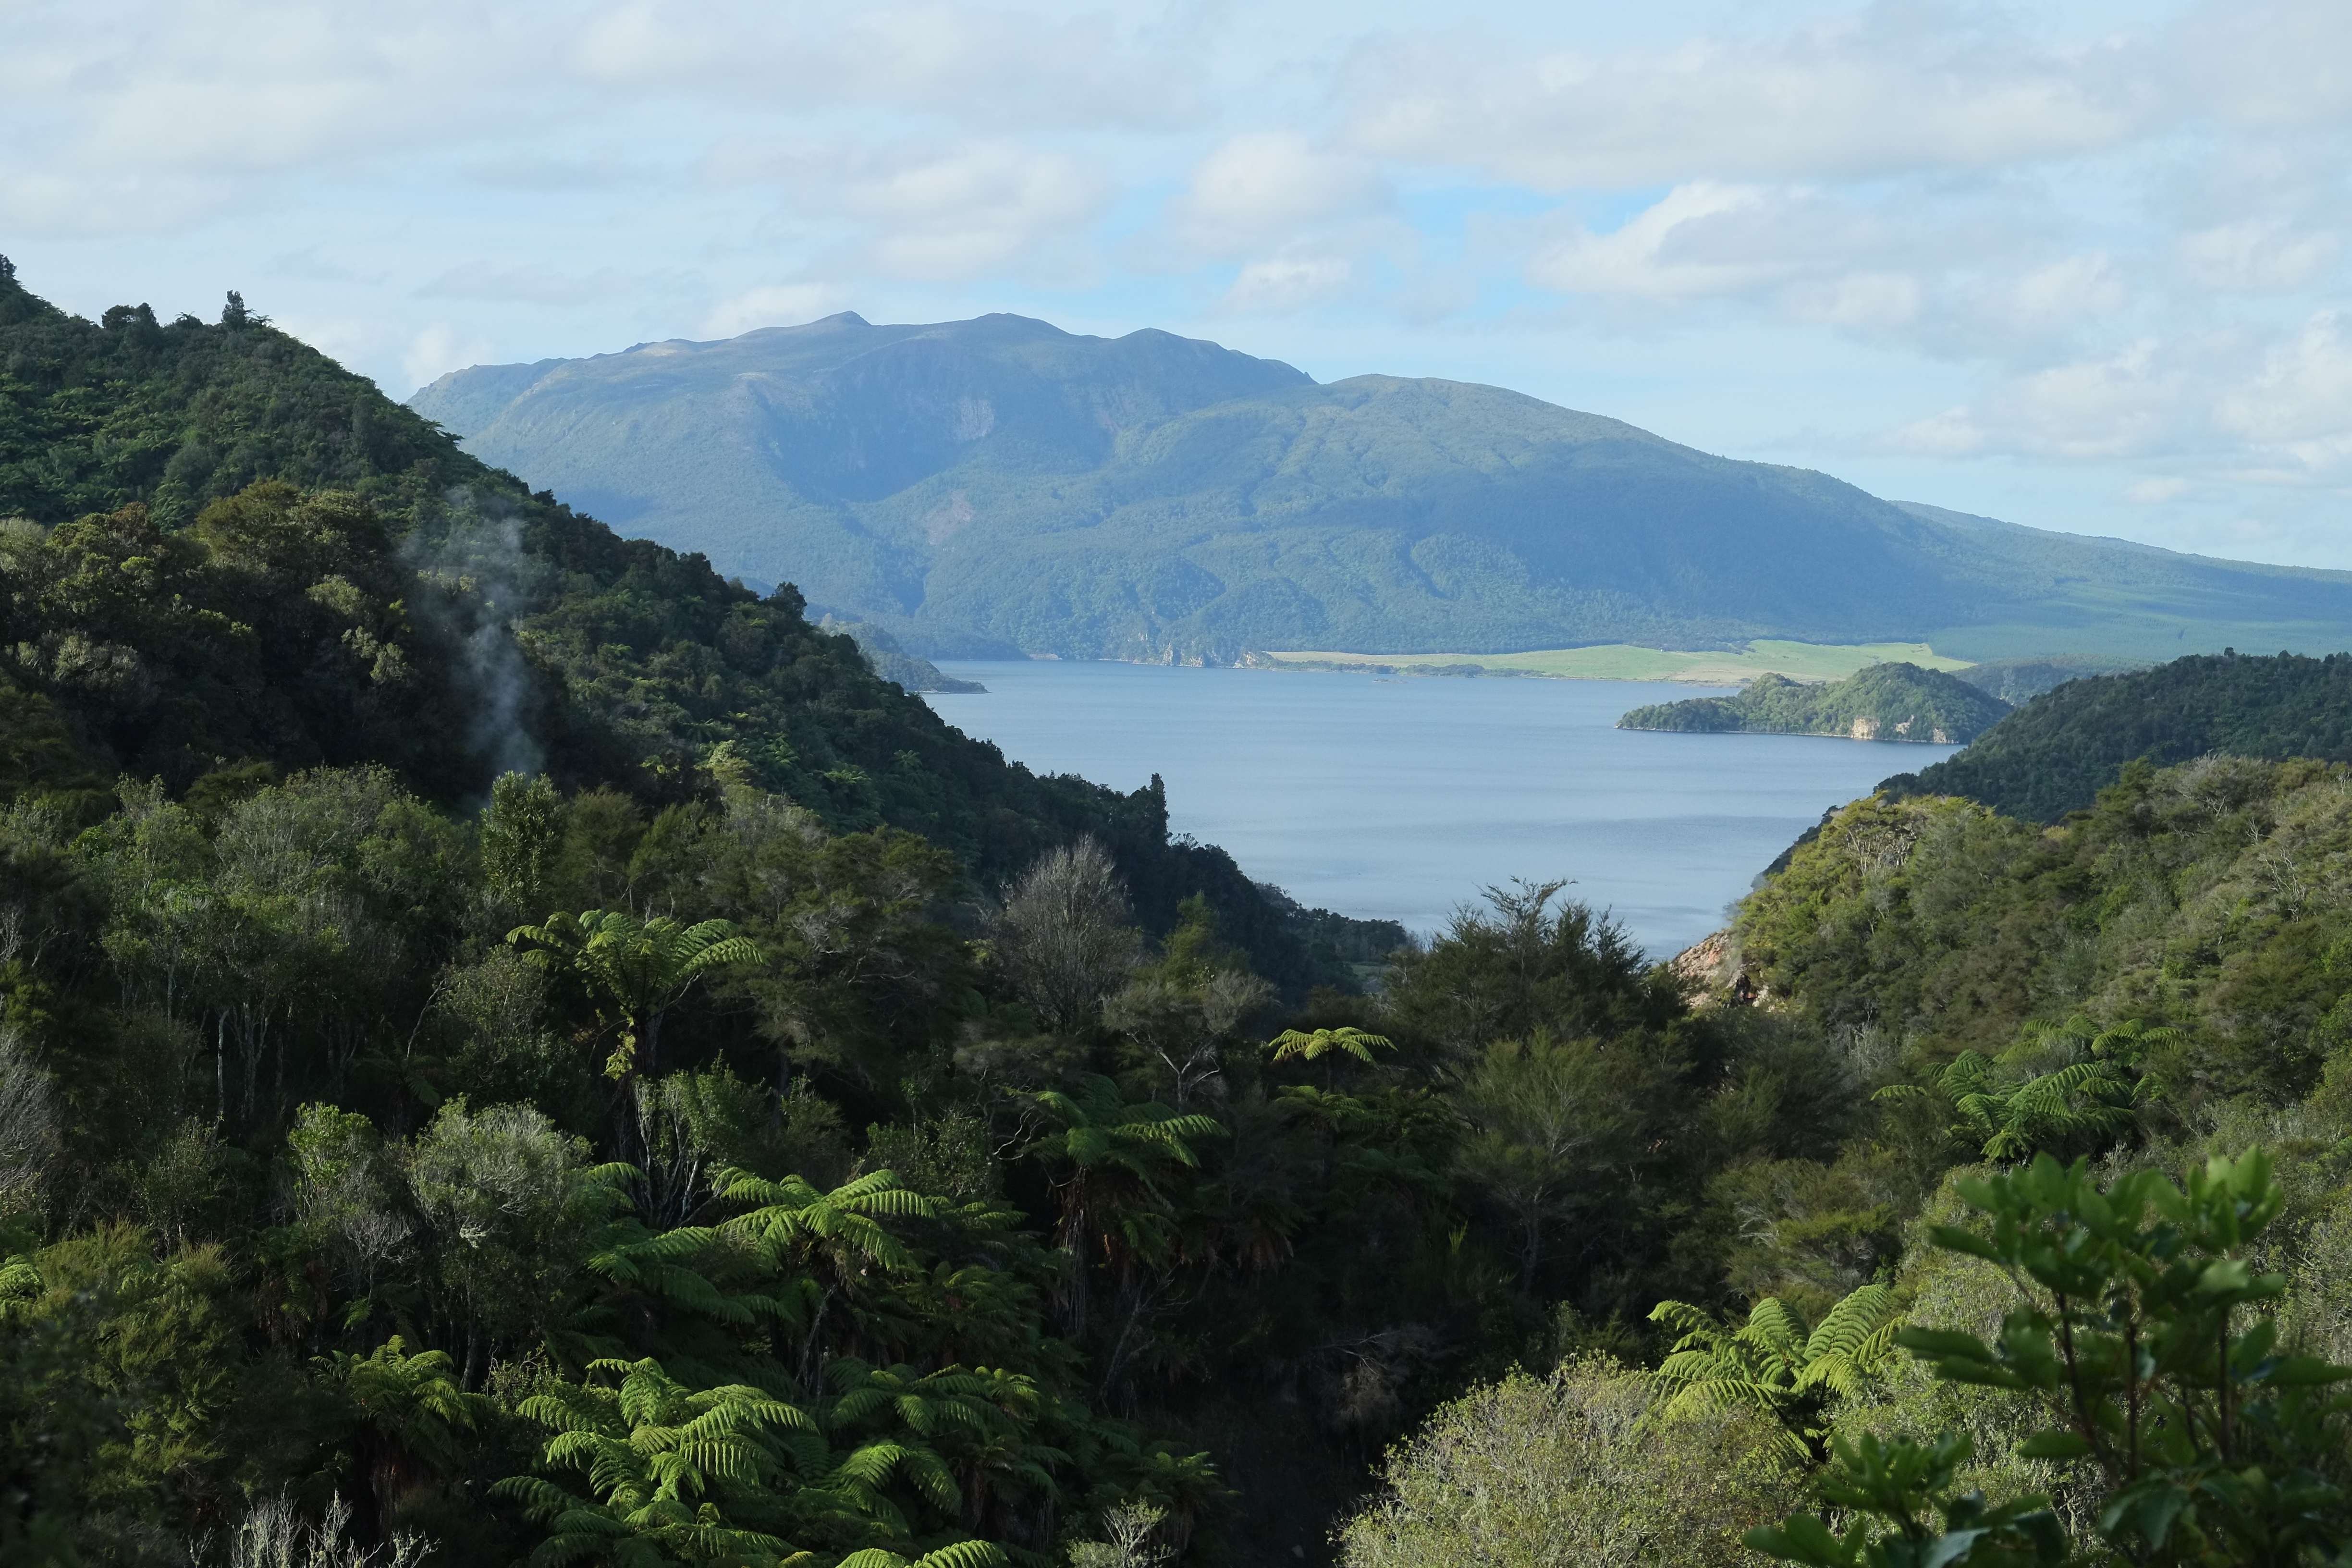 View over Lake Rotomahana and towards Mount Tarawera